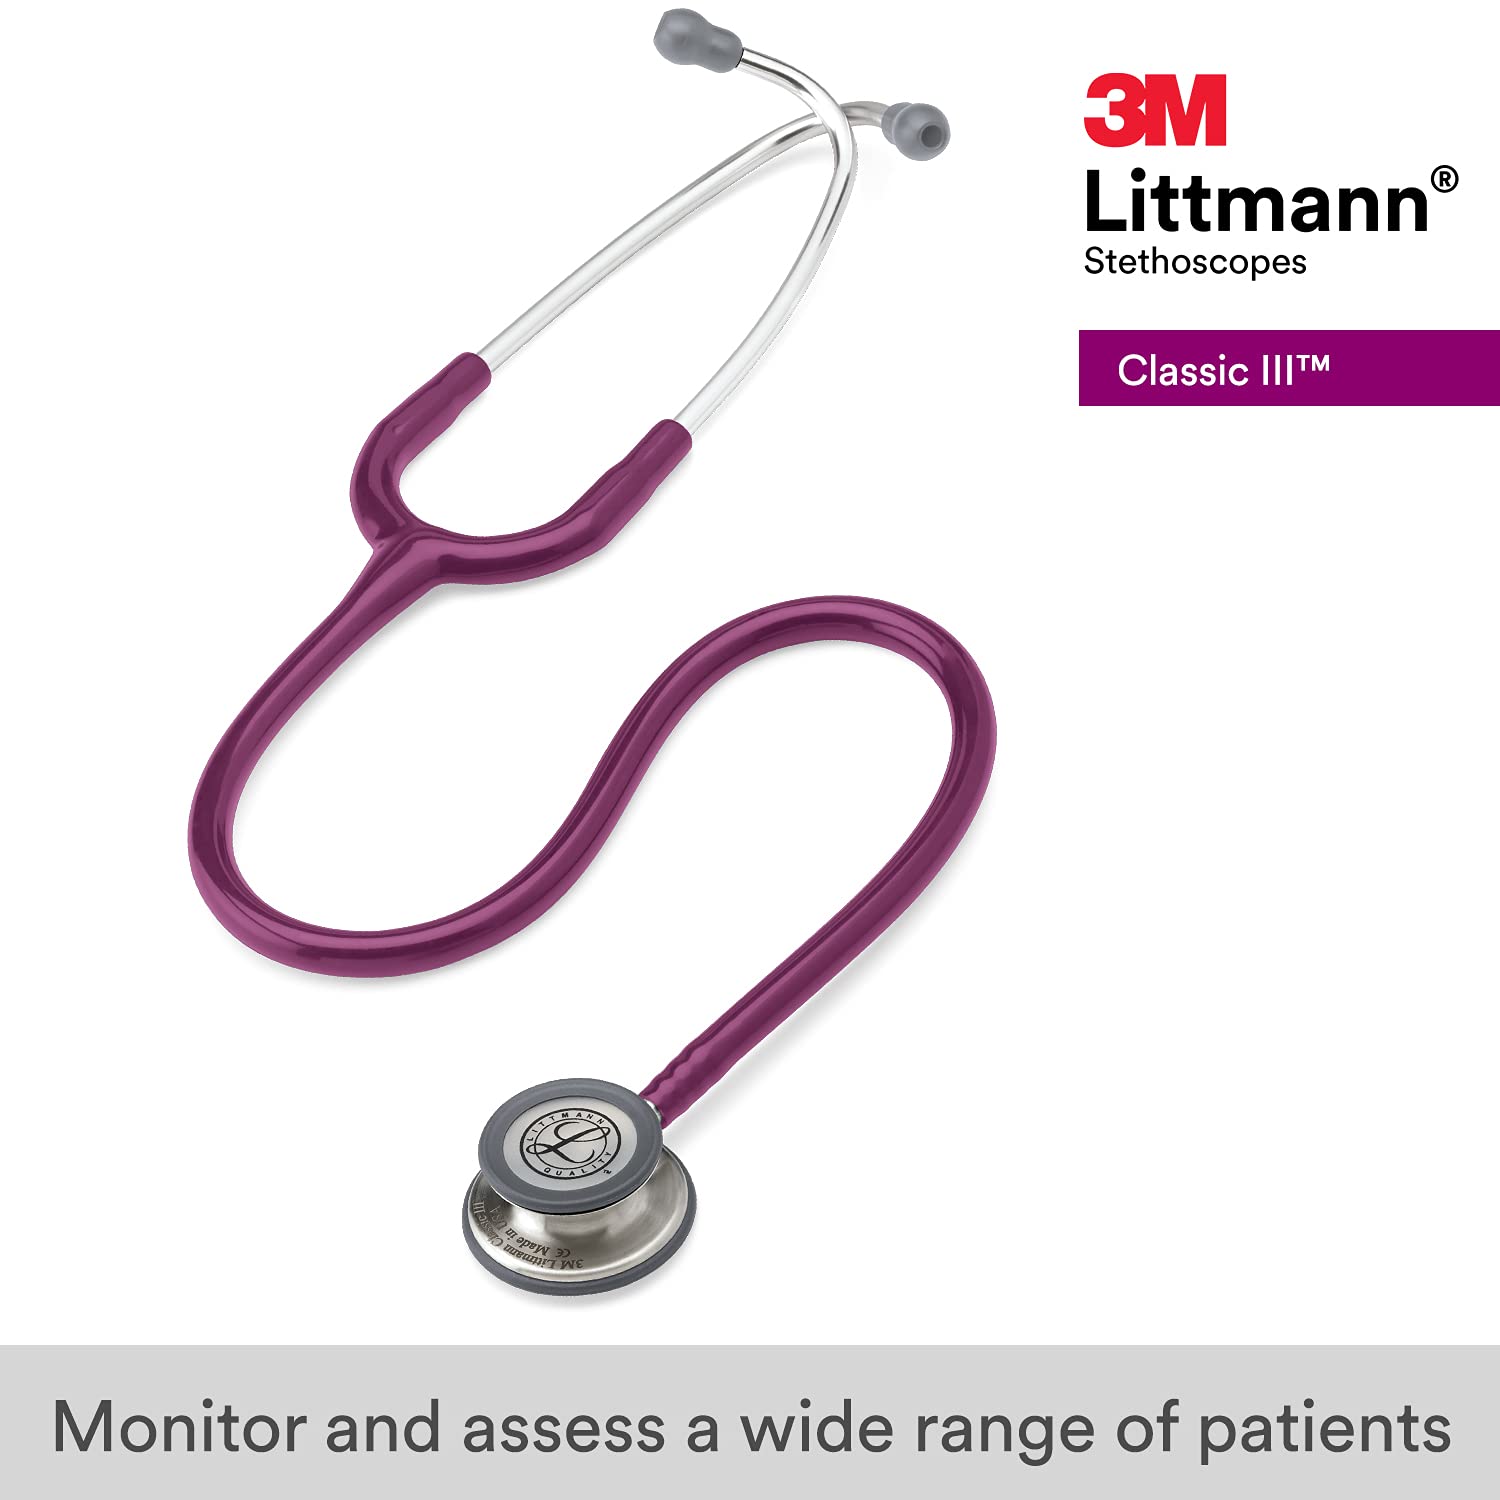 3M Littmann Classic III Monitoring Stethoscope Plum Color Tube with Standard Chest Piece 5831 - Littmann Plum Edition Stethoscope in Pakistan